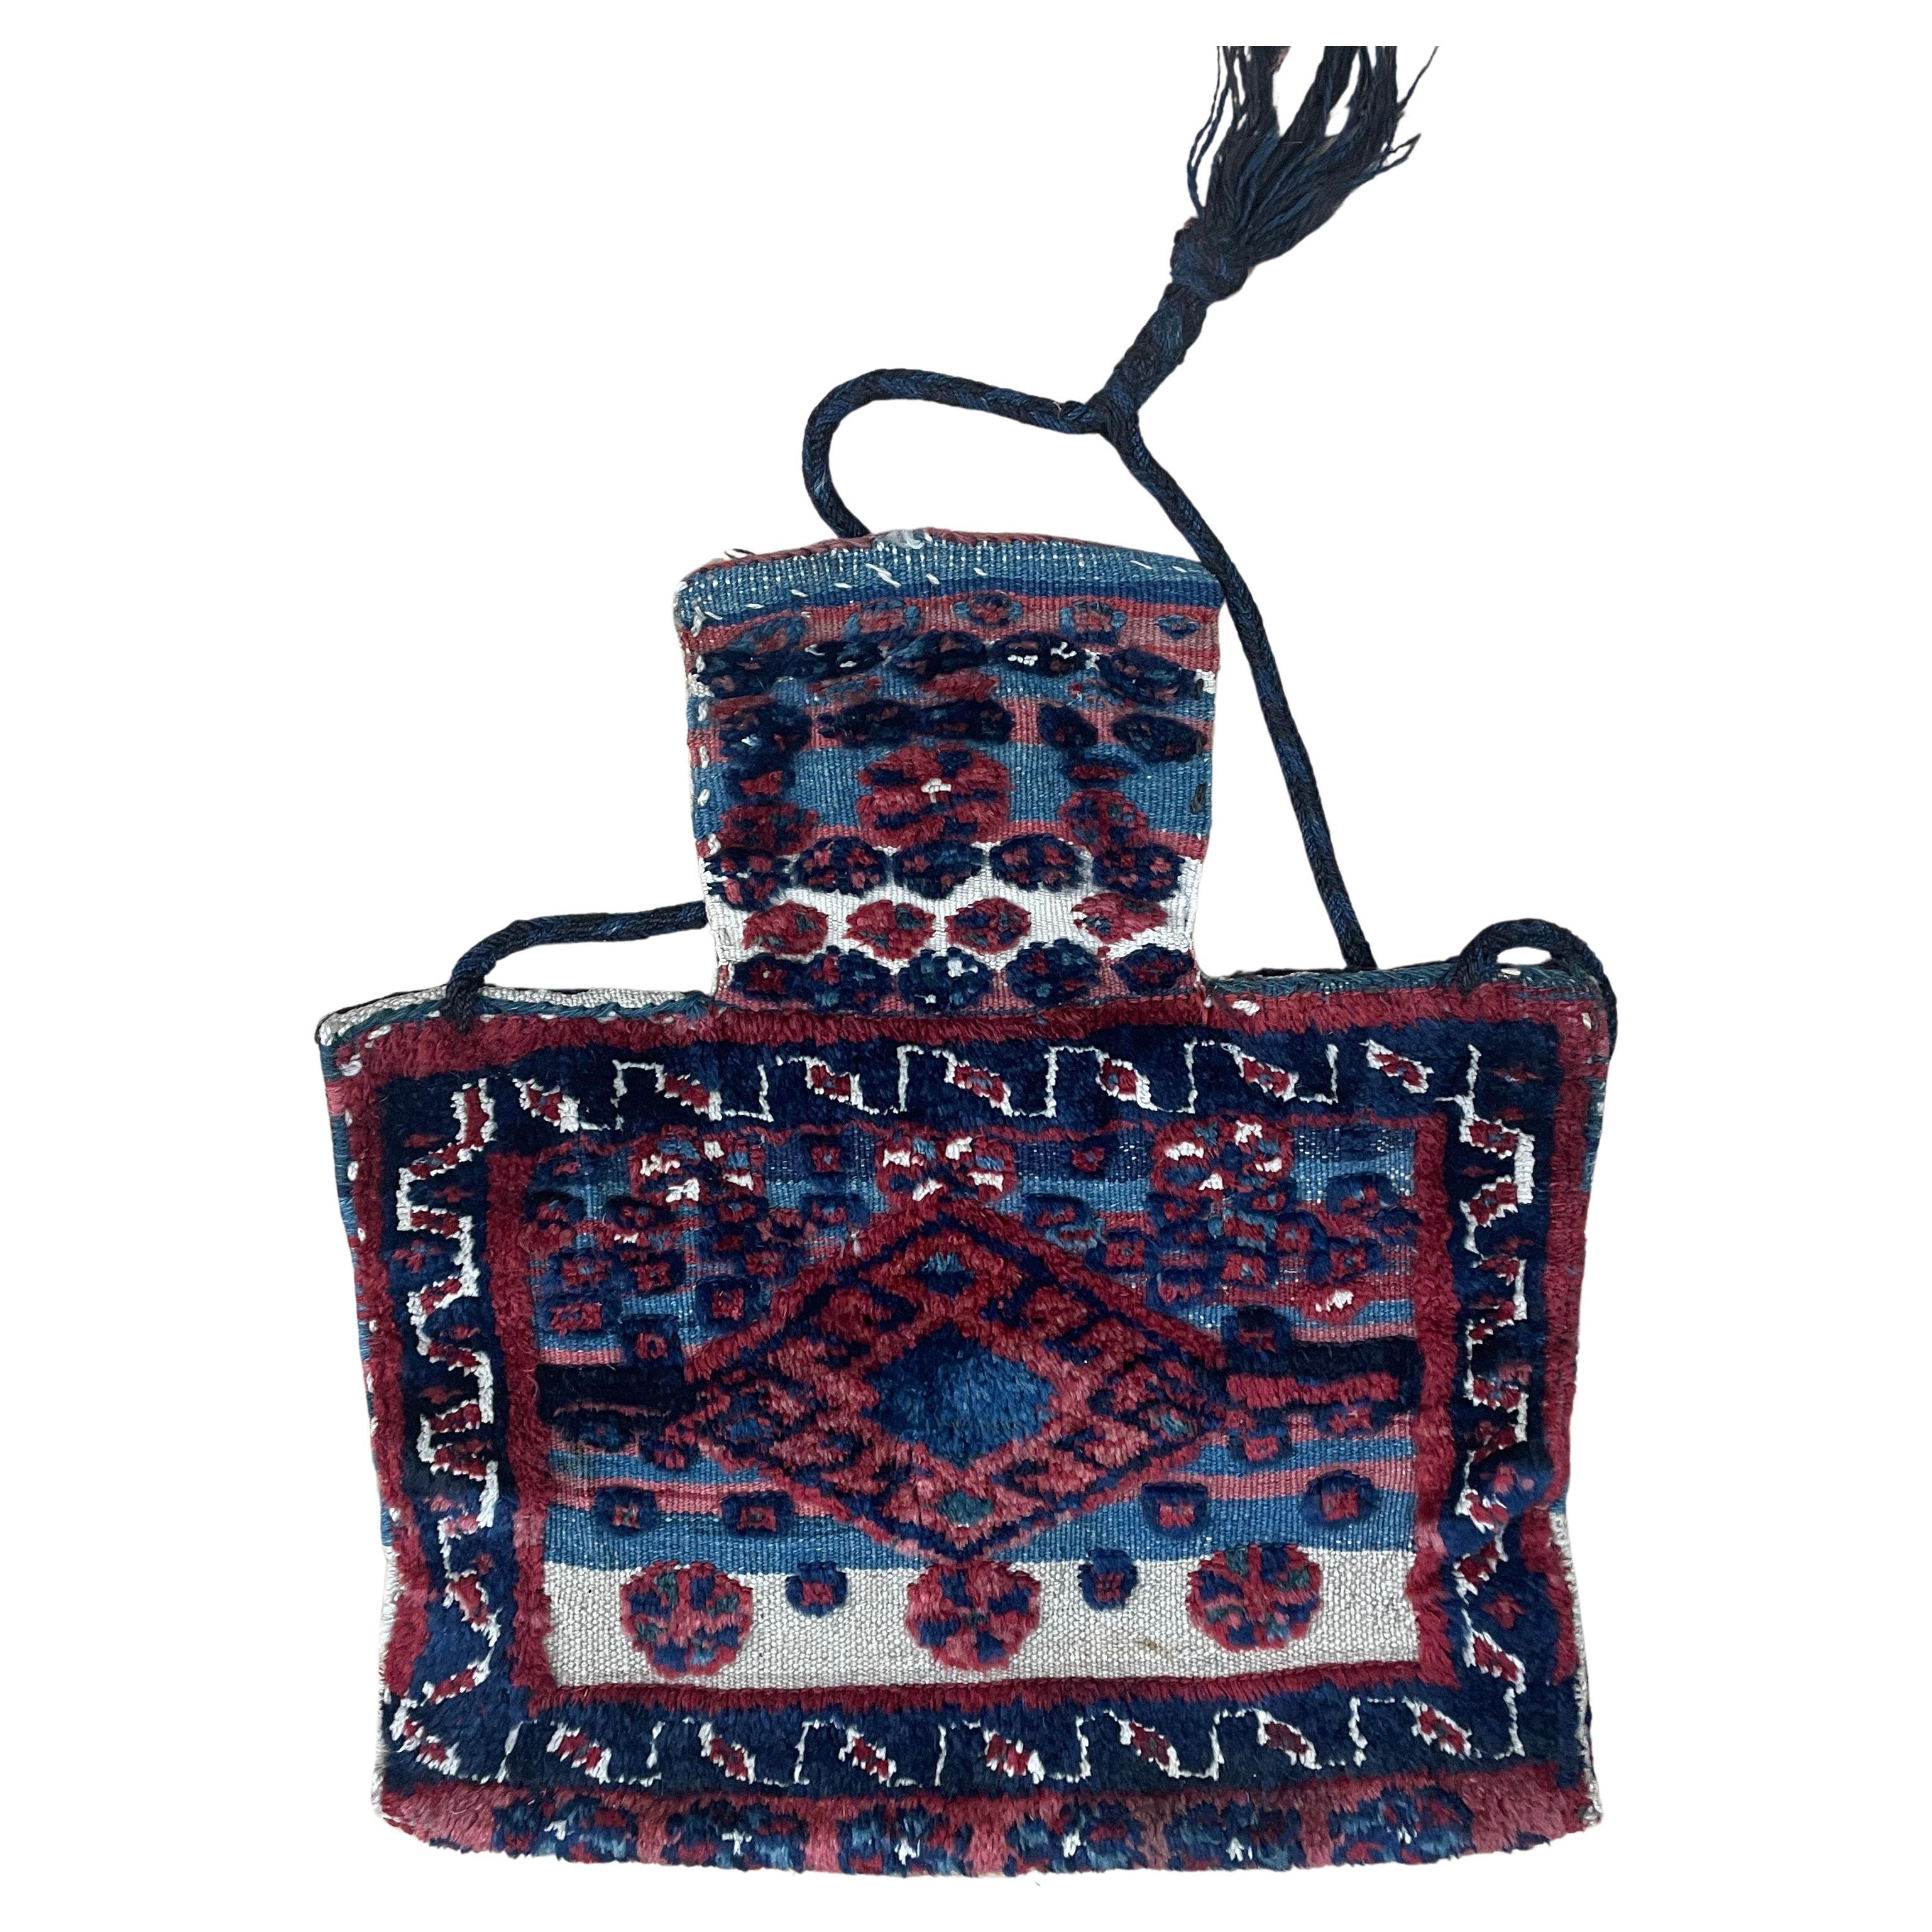 Antique Persian Azerbaijan Salt Bag